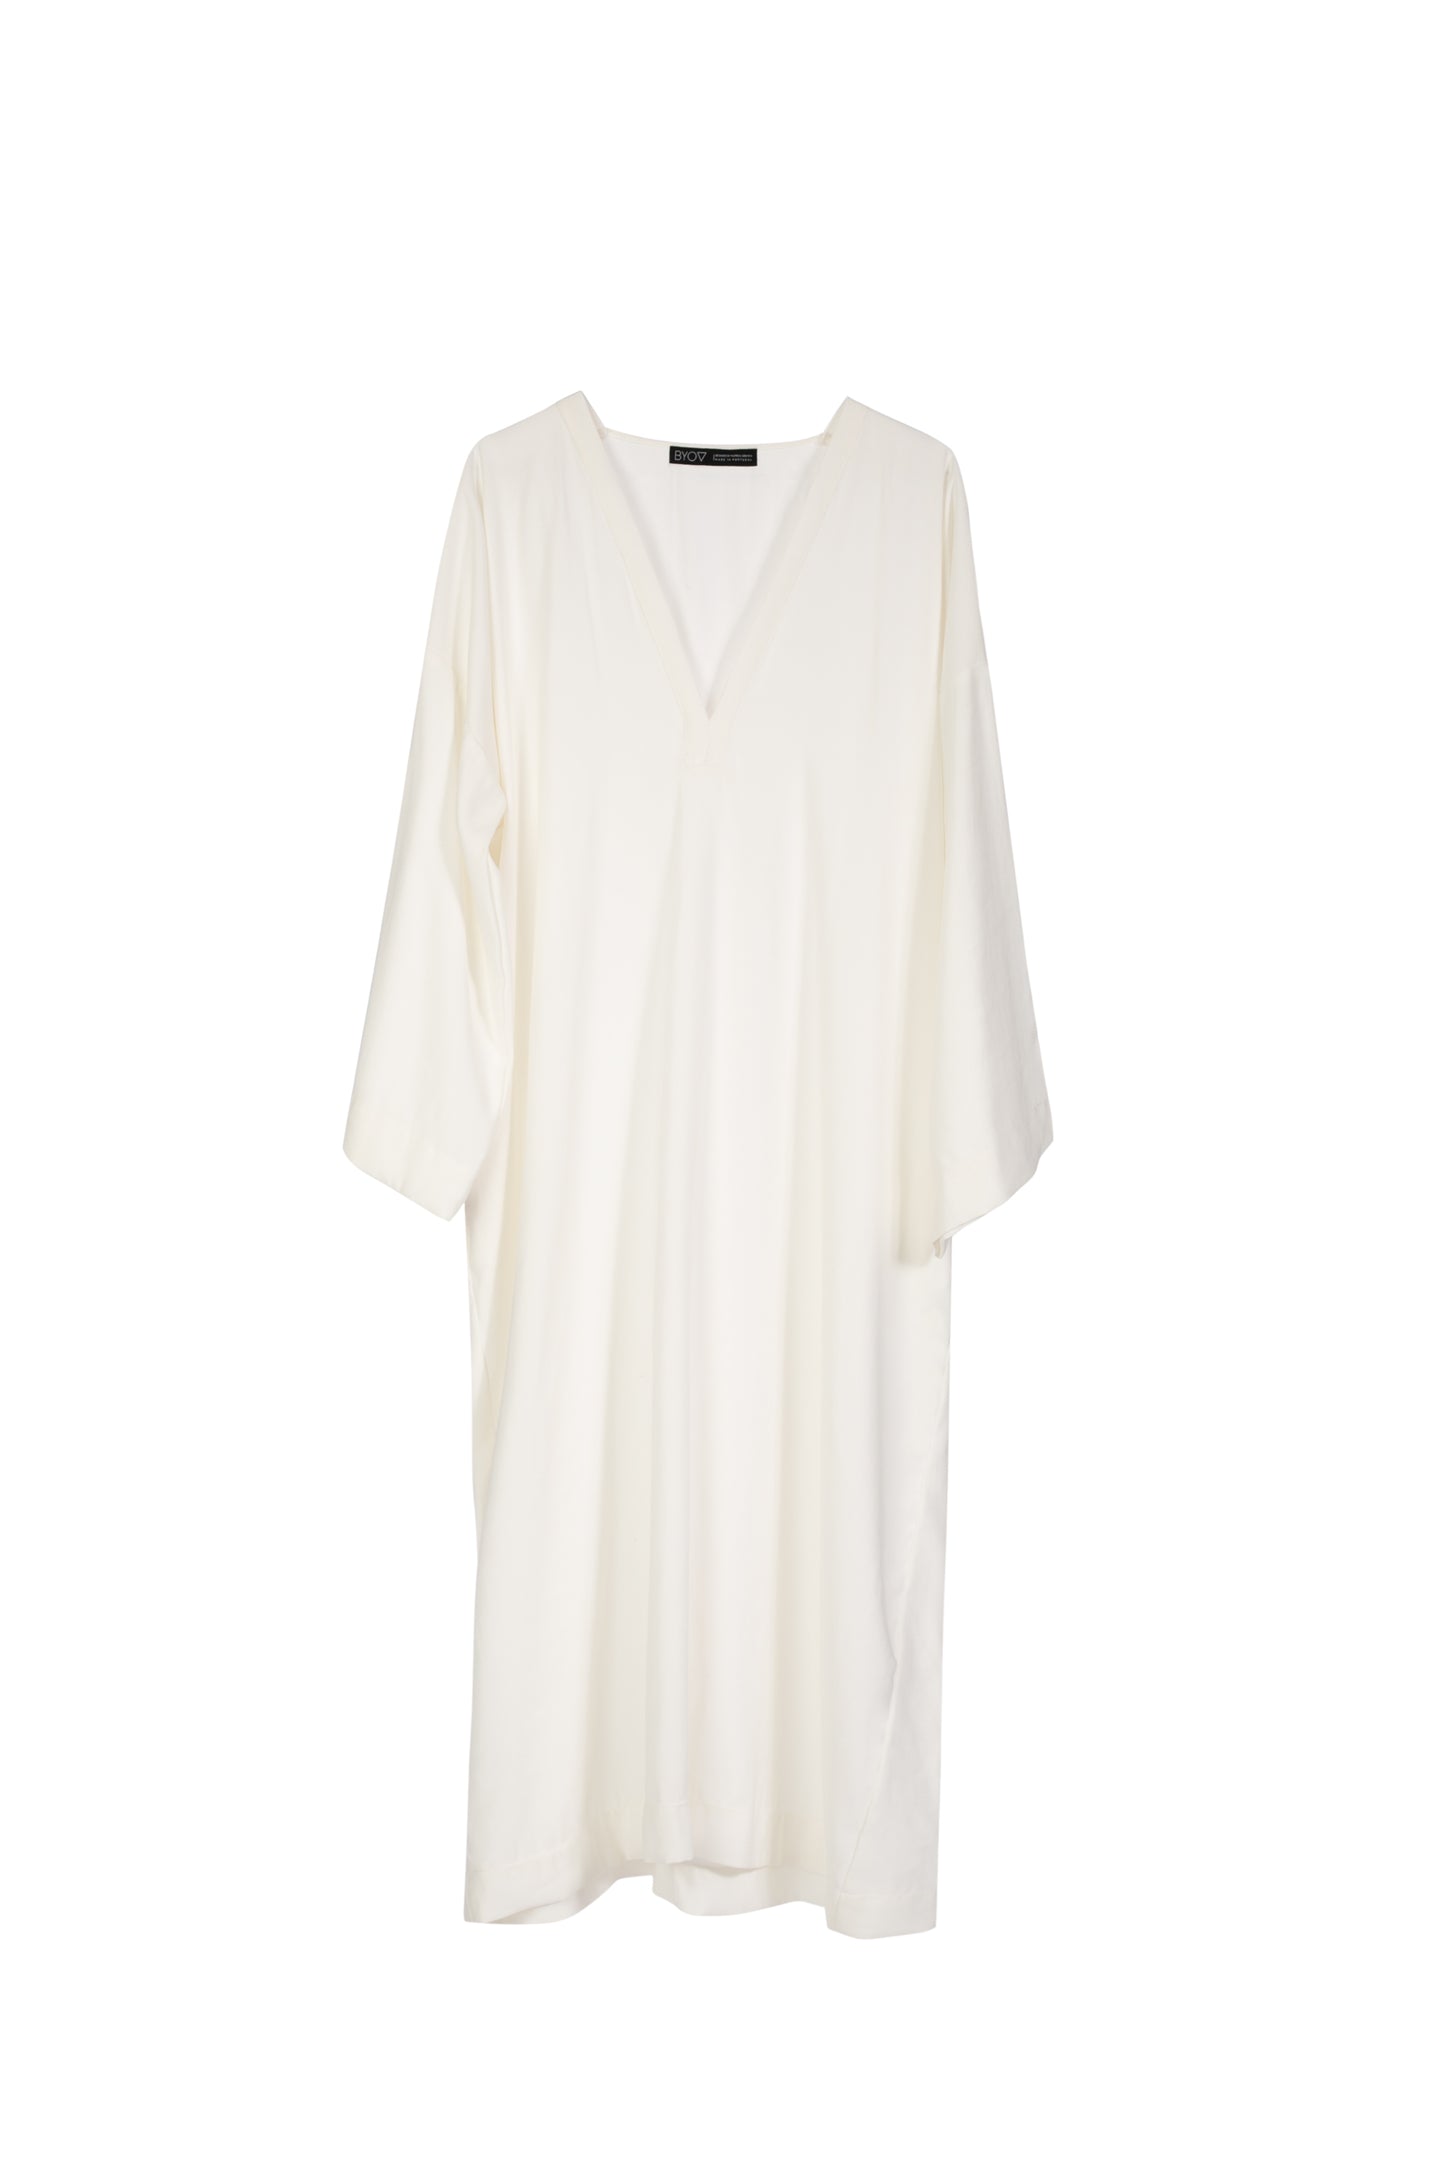 Quimono dress white | Java